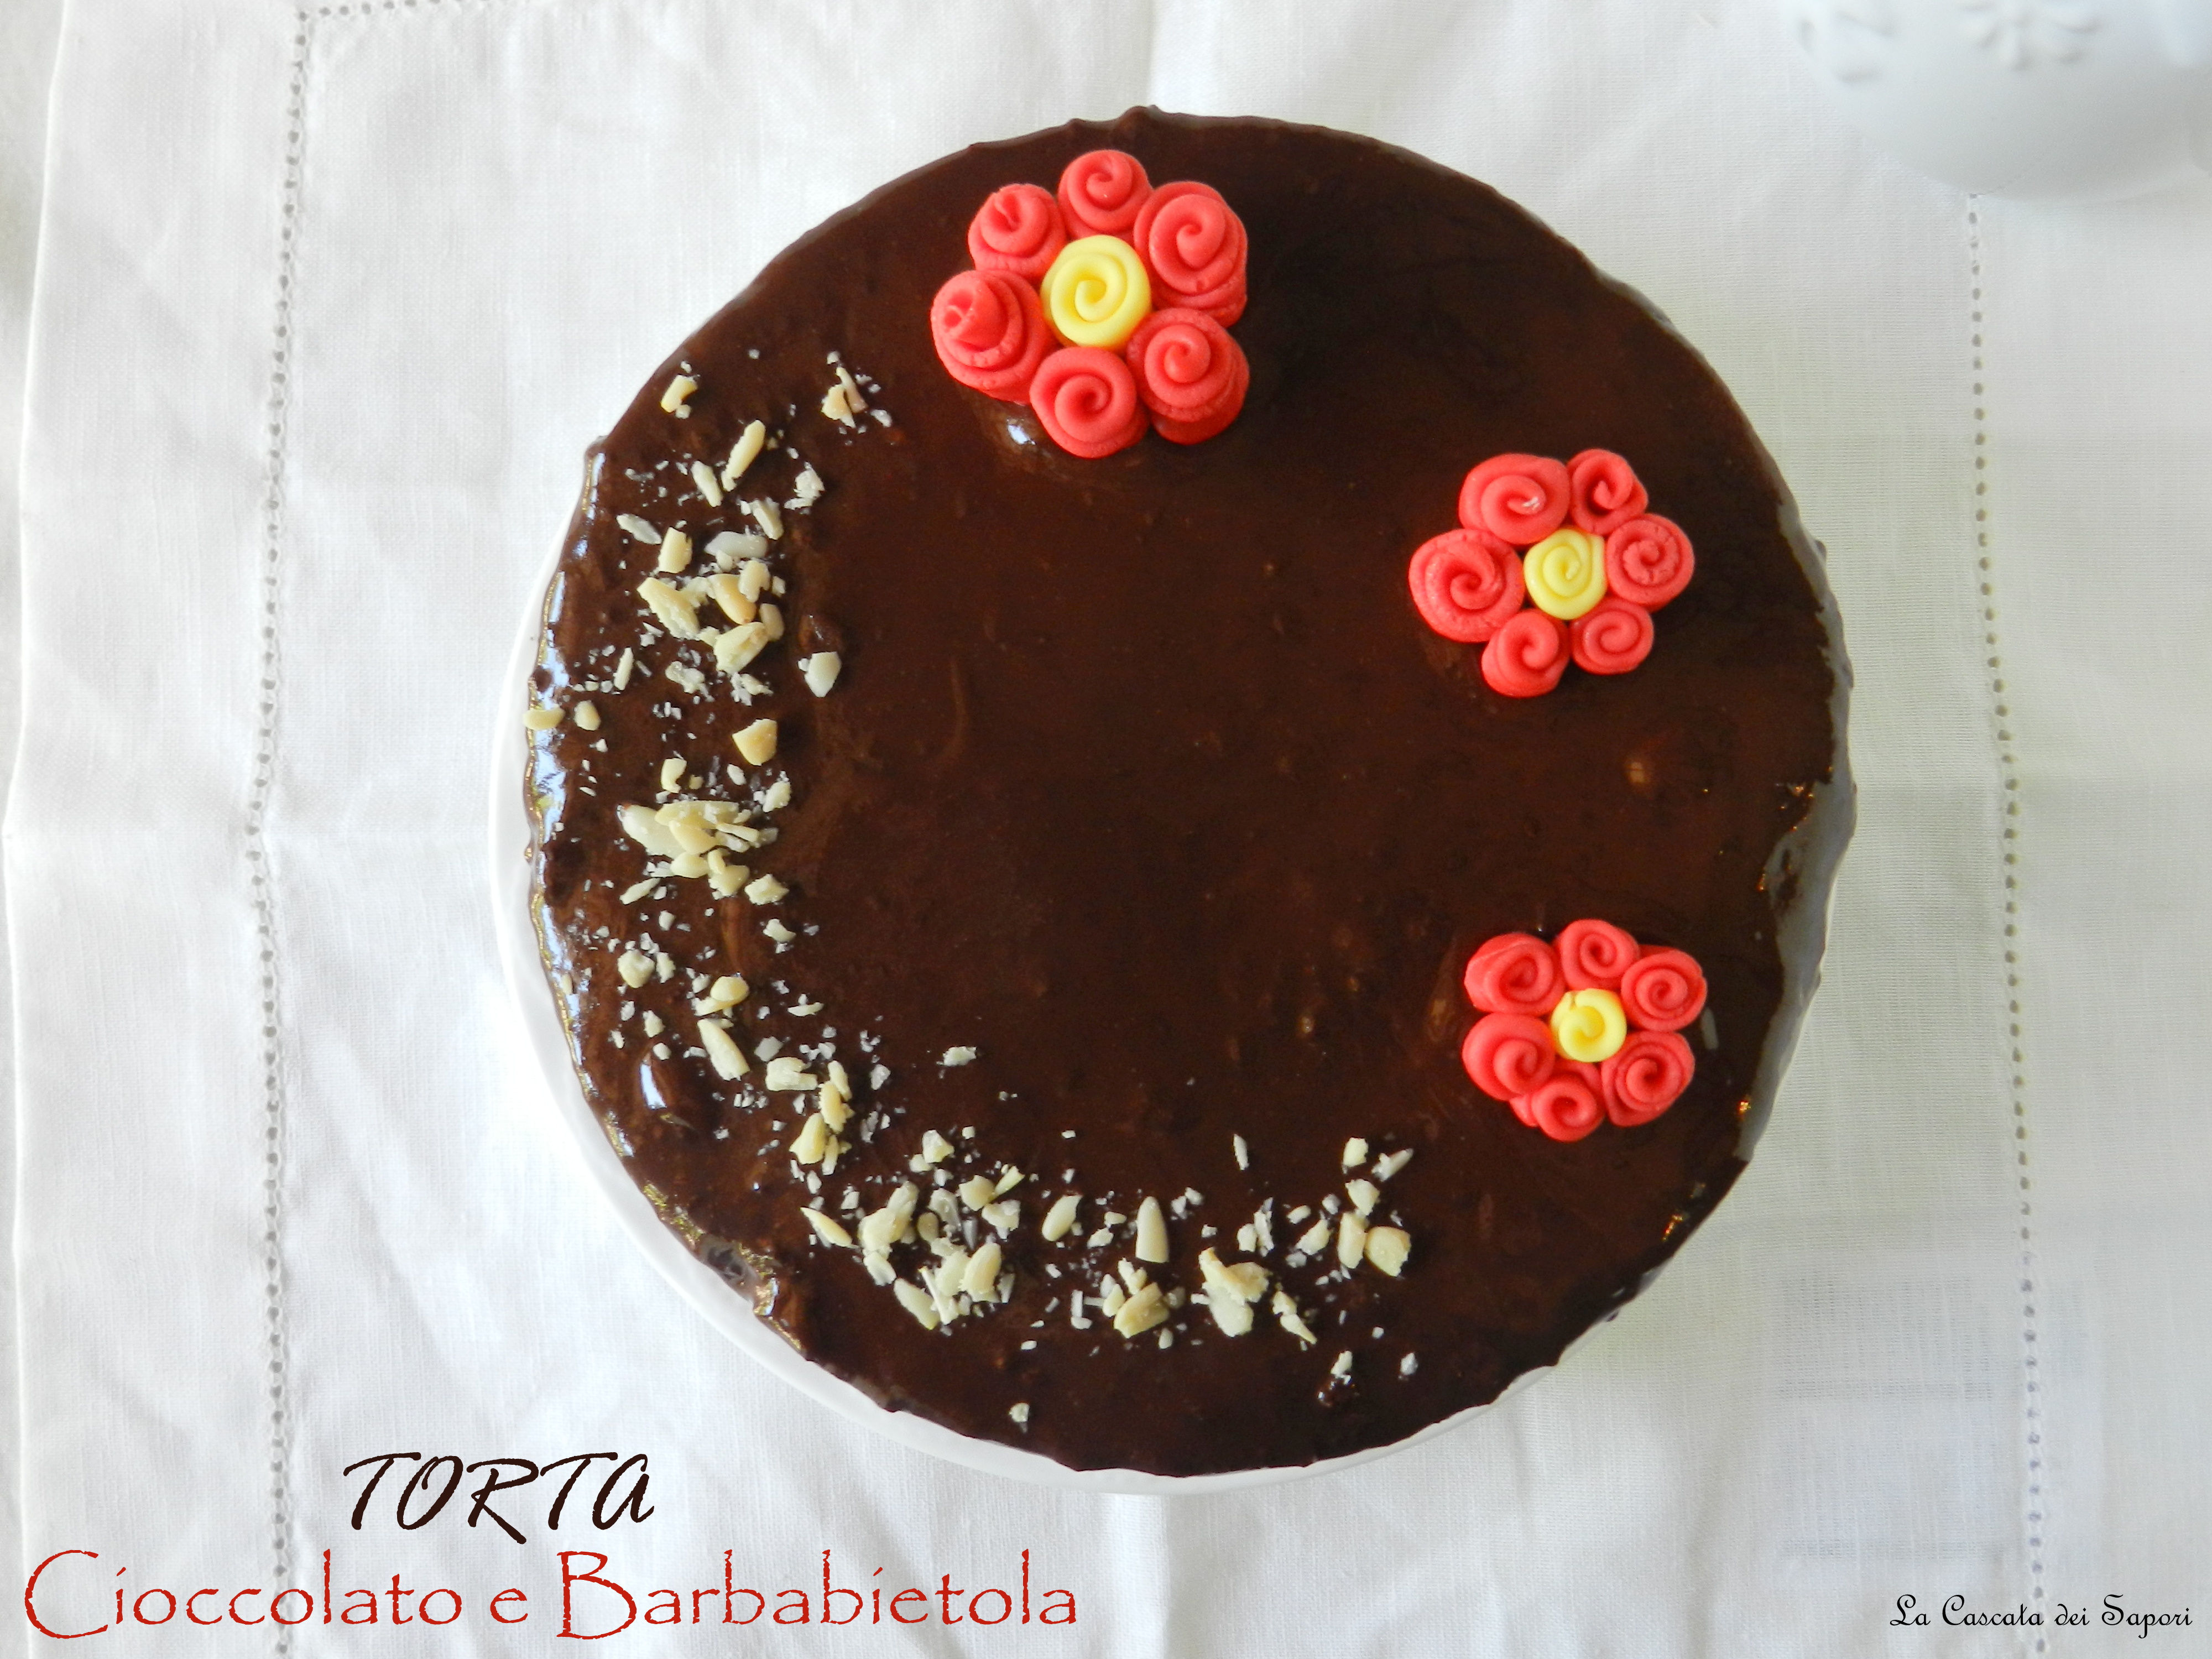 Torta Cioccolato e Barbabietola: Chocolate Beetroot Cake